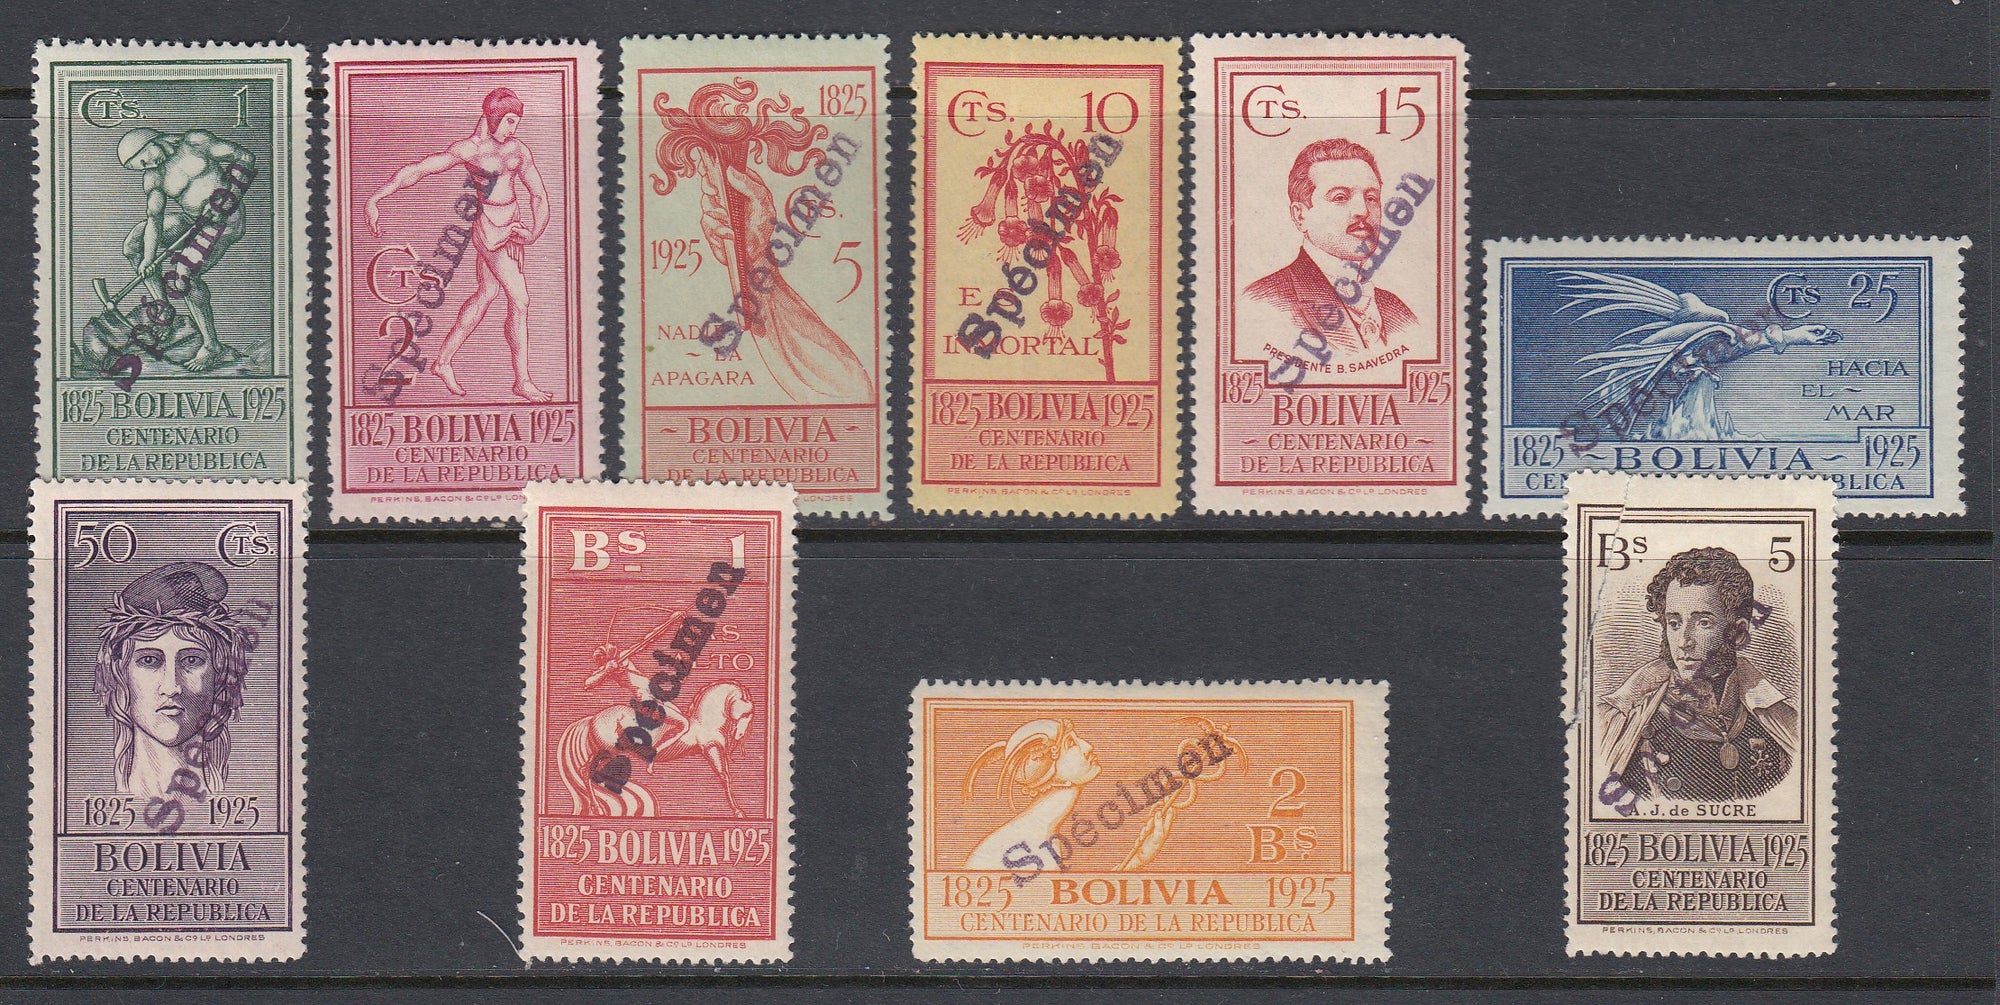 Bolivia 1925 Centenary Complete Specimen Set LM Mint. Scott 150-159 var